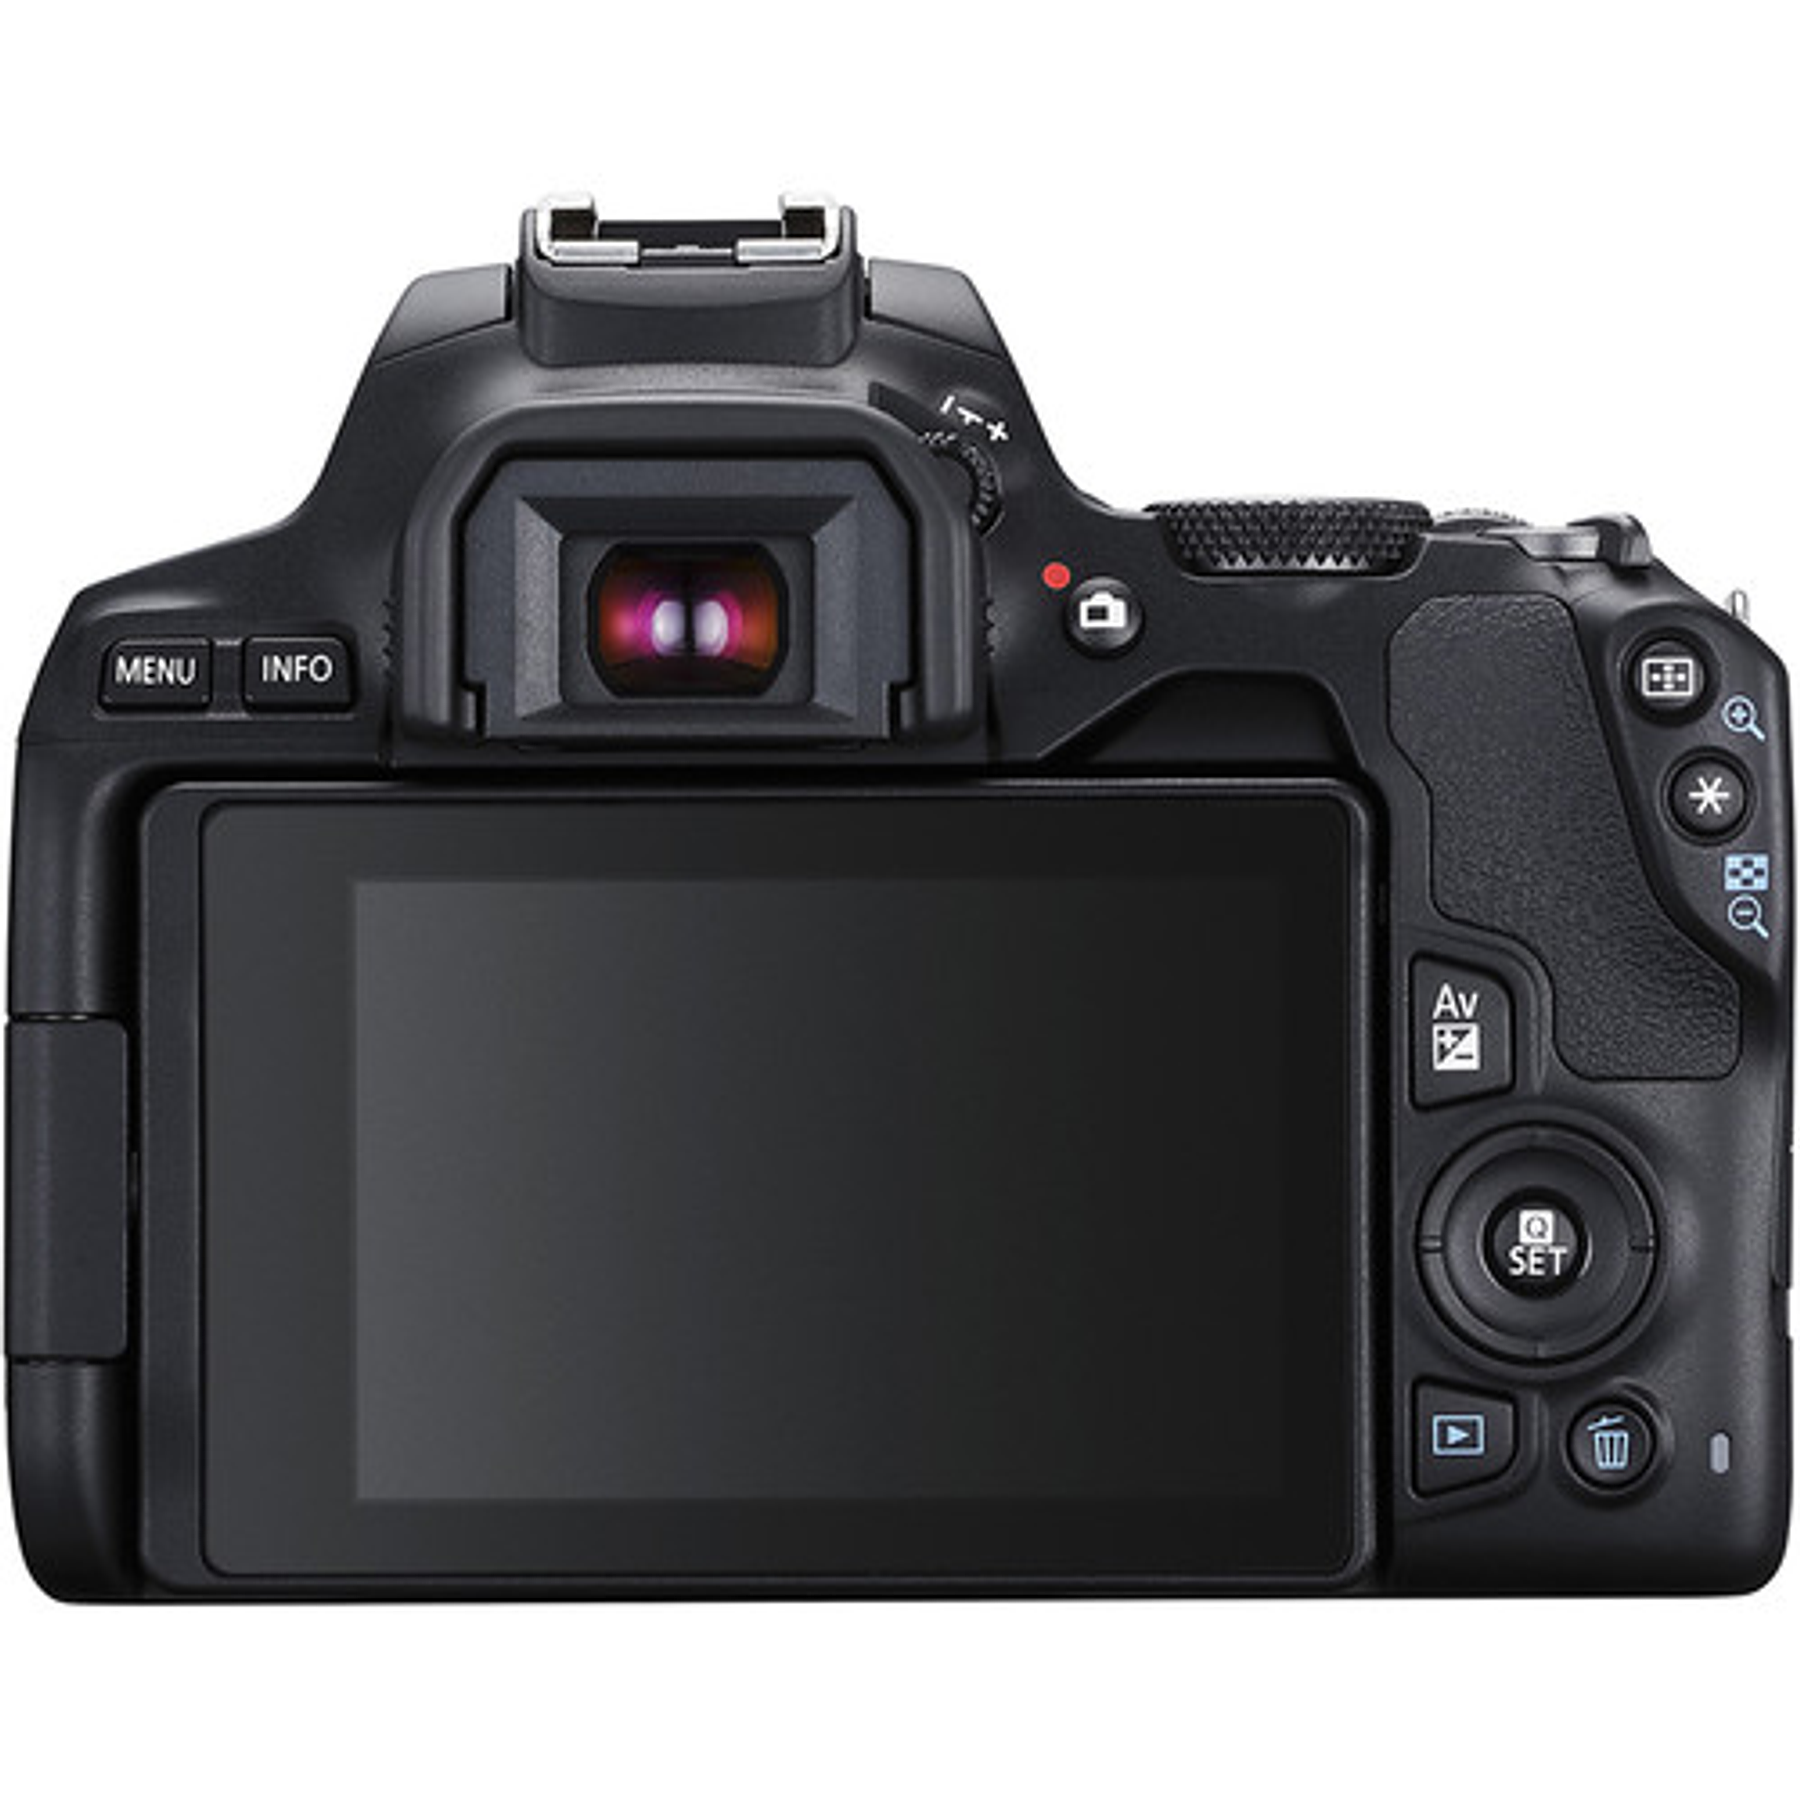 Canon EOS Rebel SL3 con lente EF-S 18-55mm f/4-5.6 IS STM